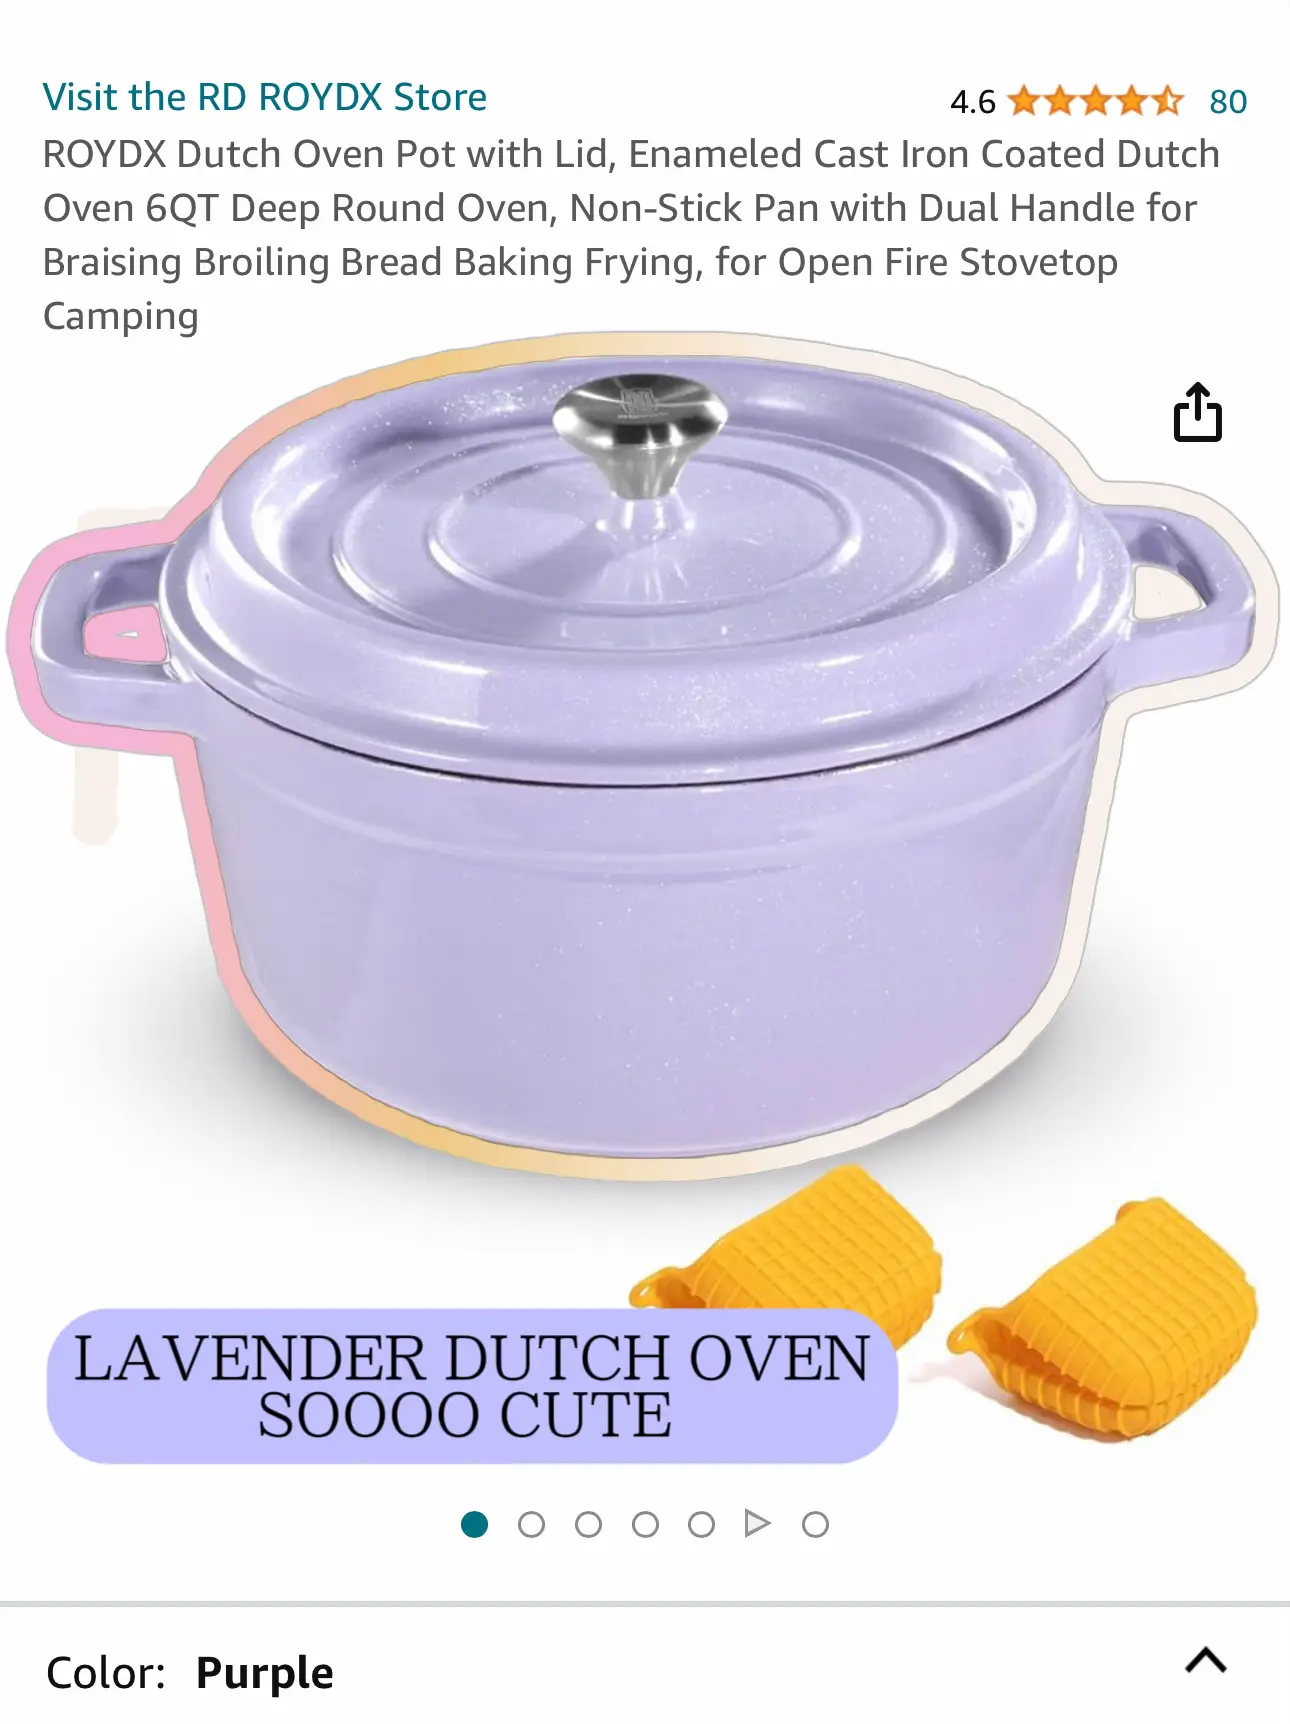 ROYDX Dutch Oven Pot with Lid, Enameled Cast Iron Coated Dutch